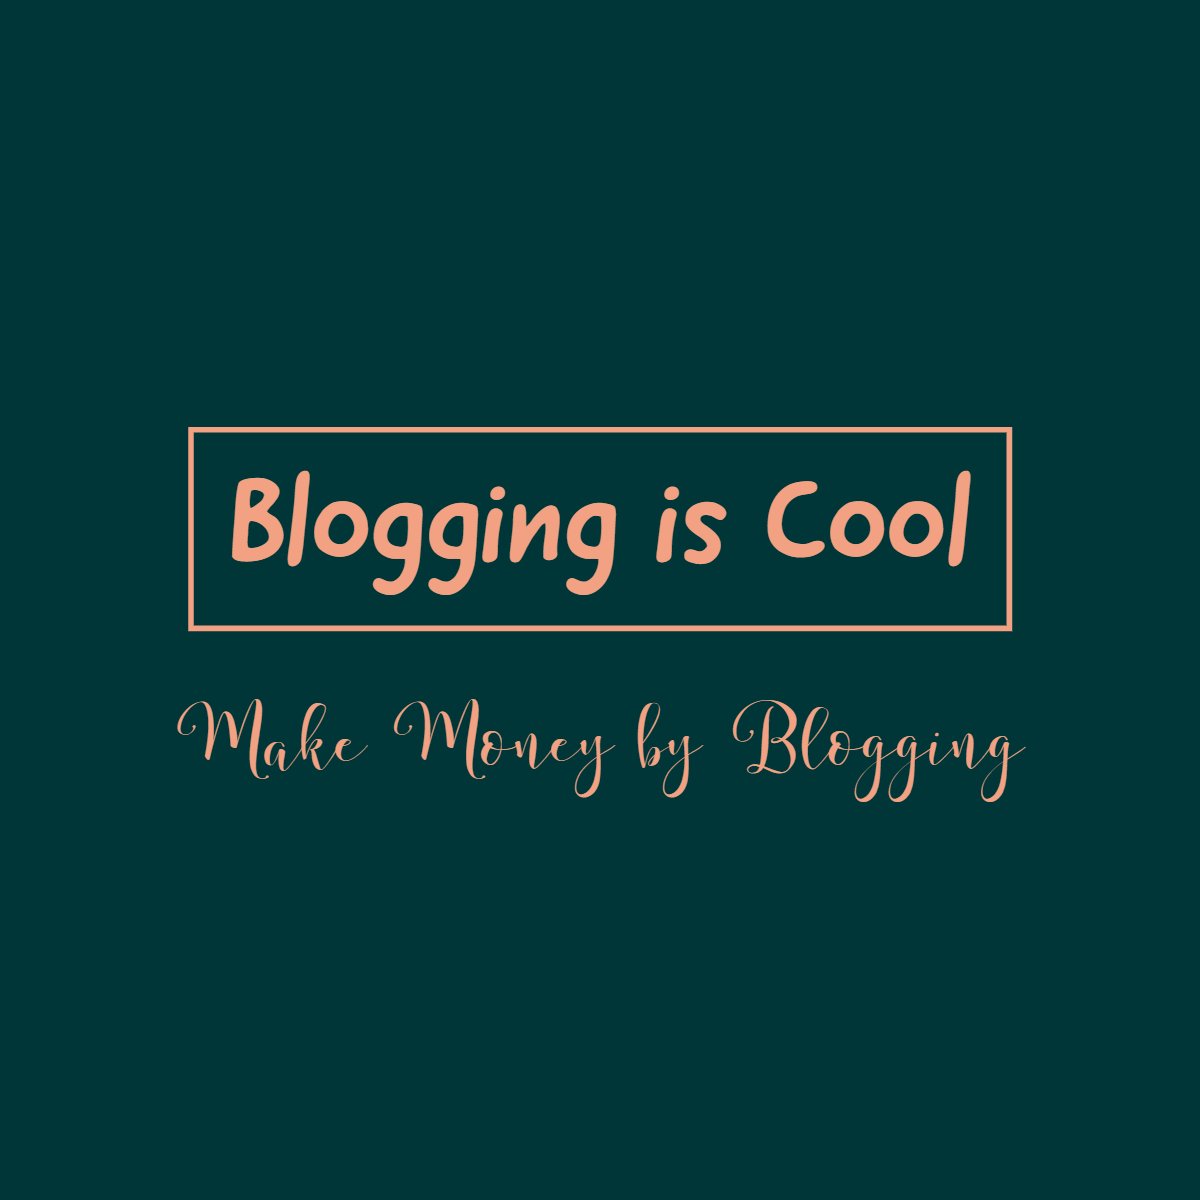 bloggingiscool.com how to become an SEO expert